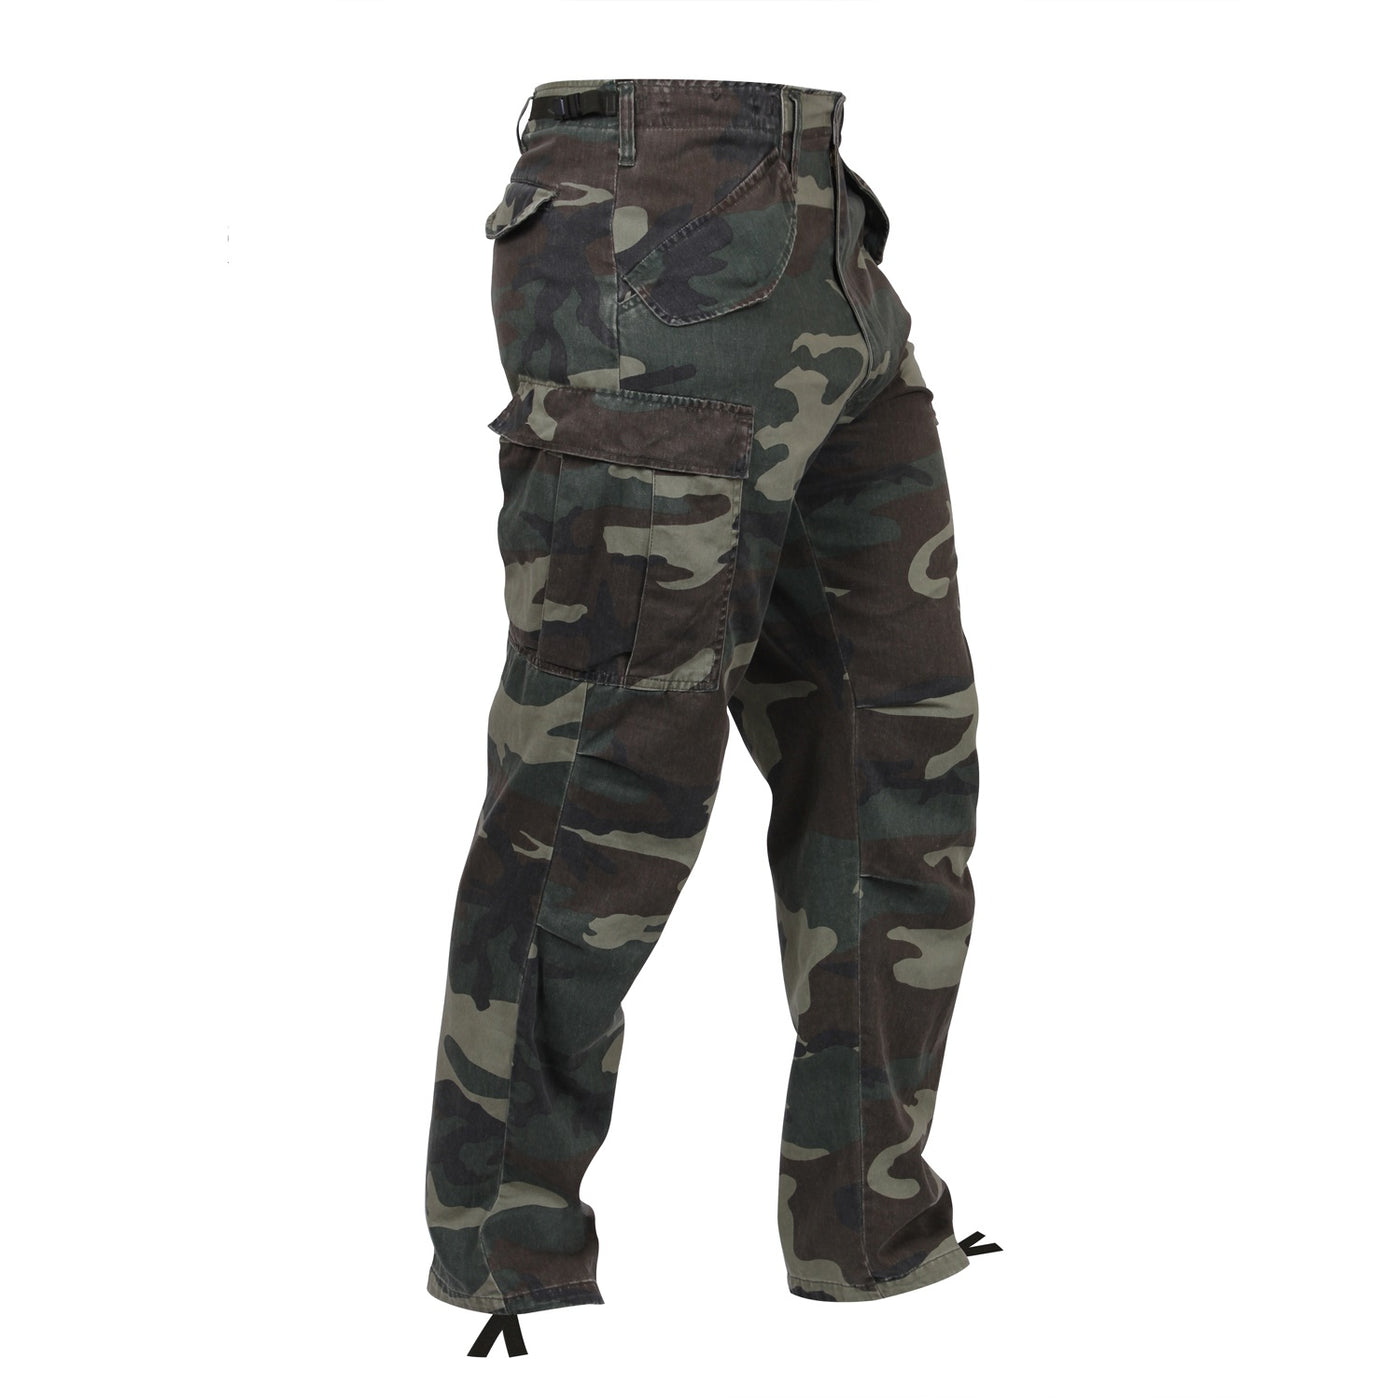 Rothco Vintage M-65 Field Pants